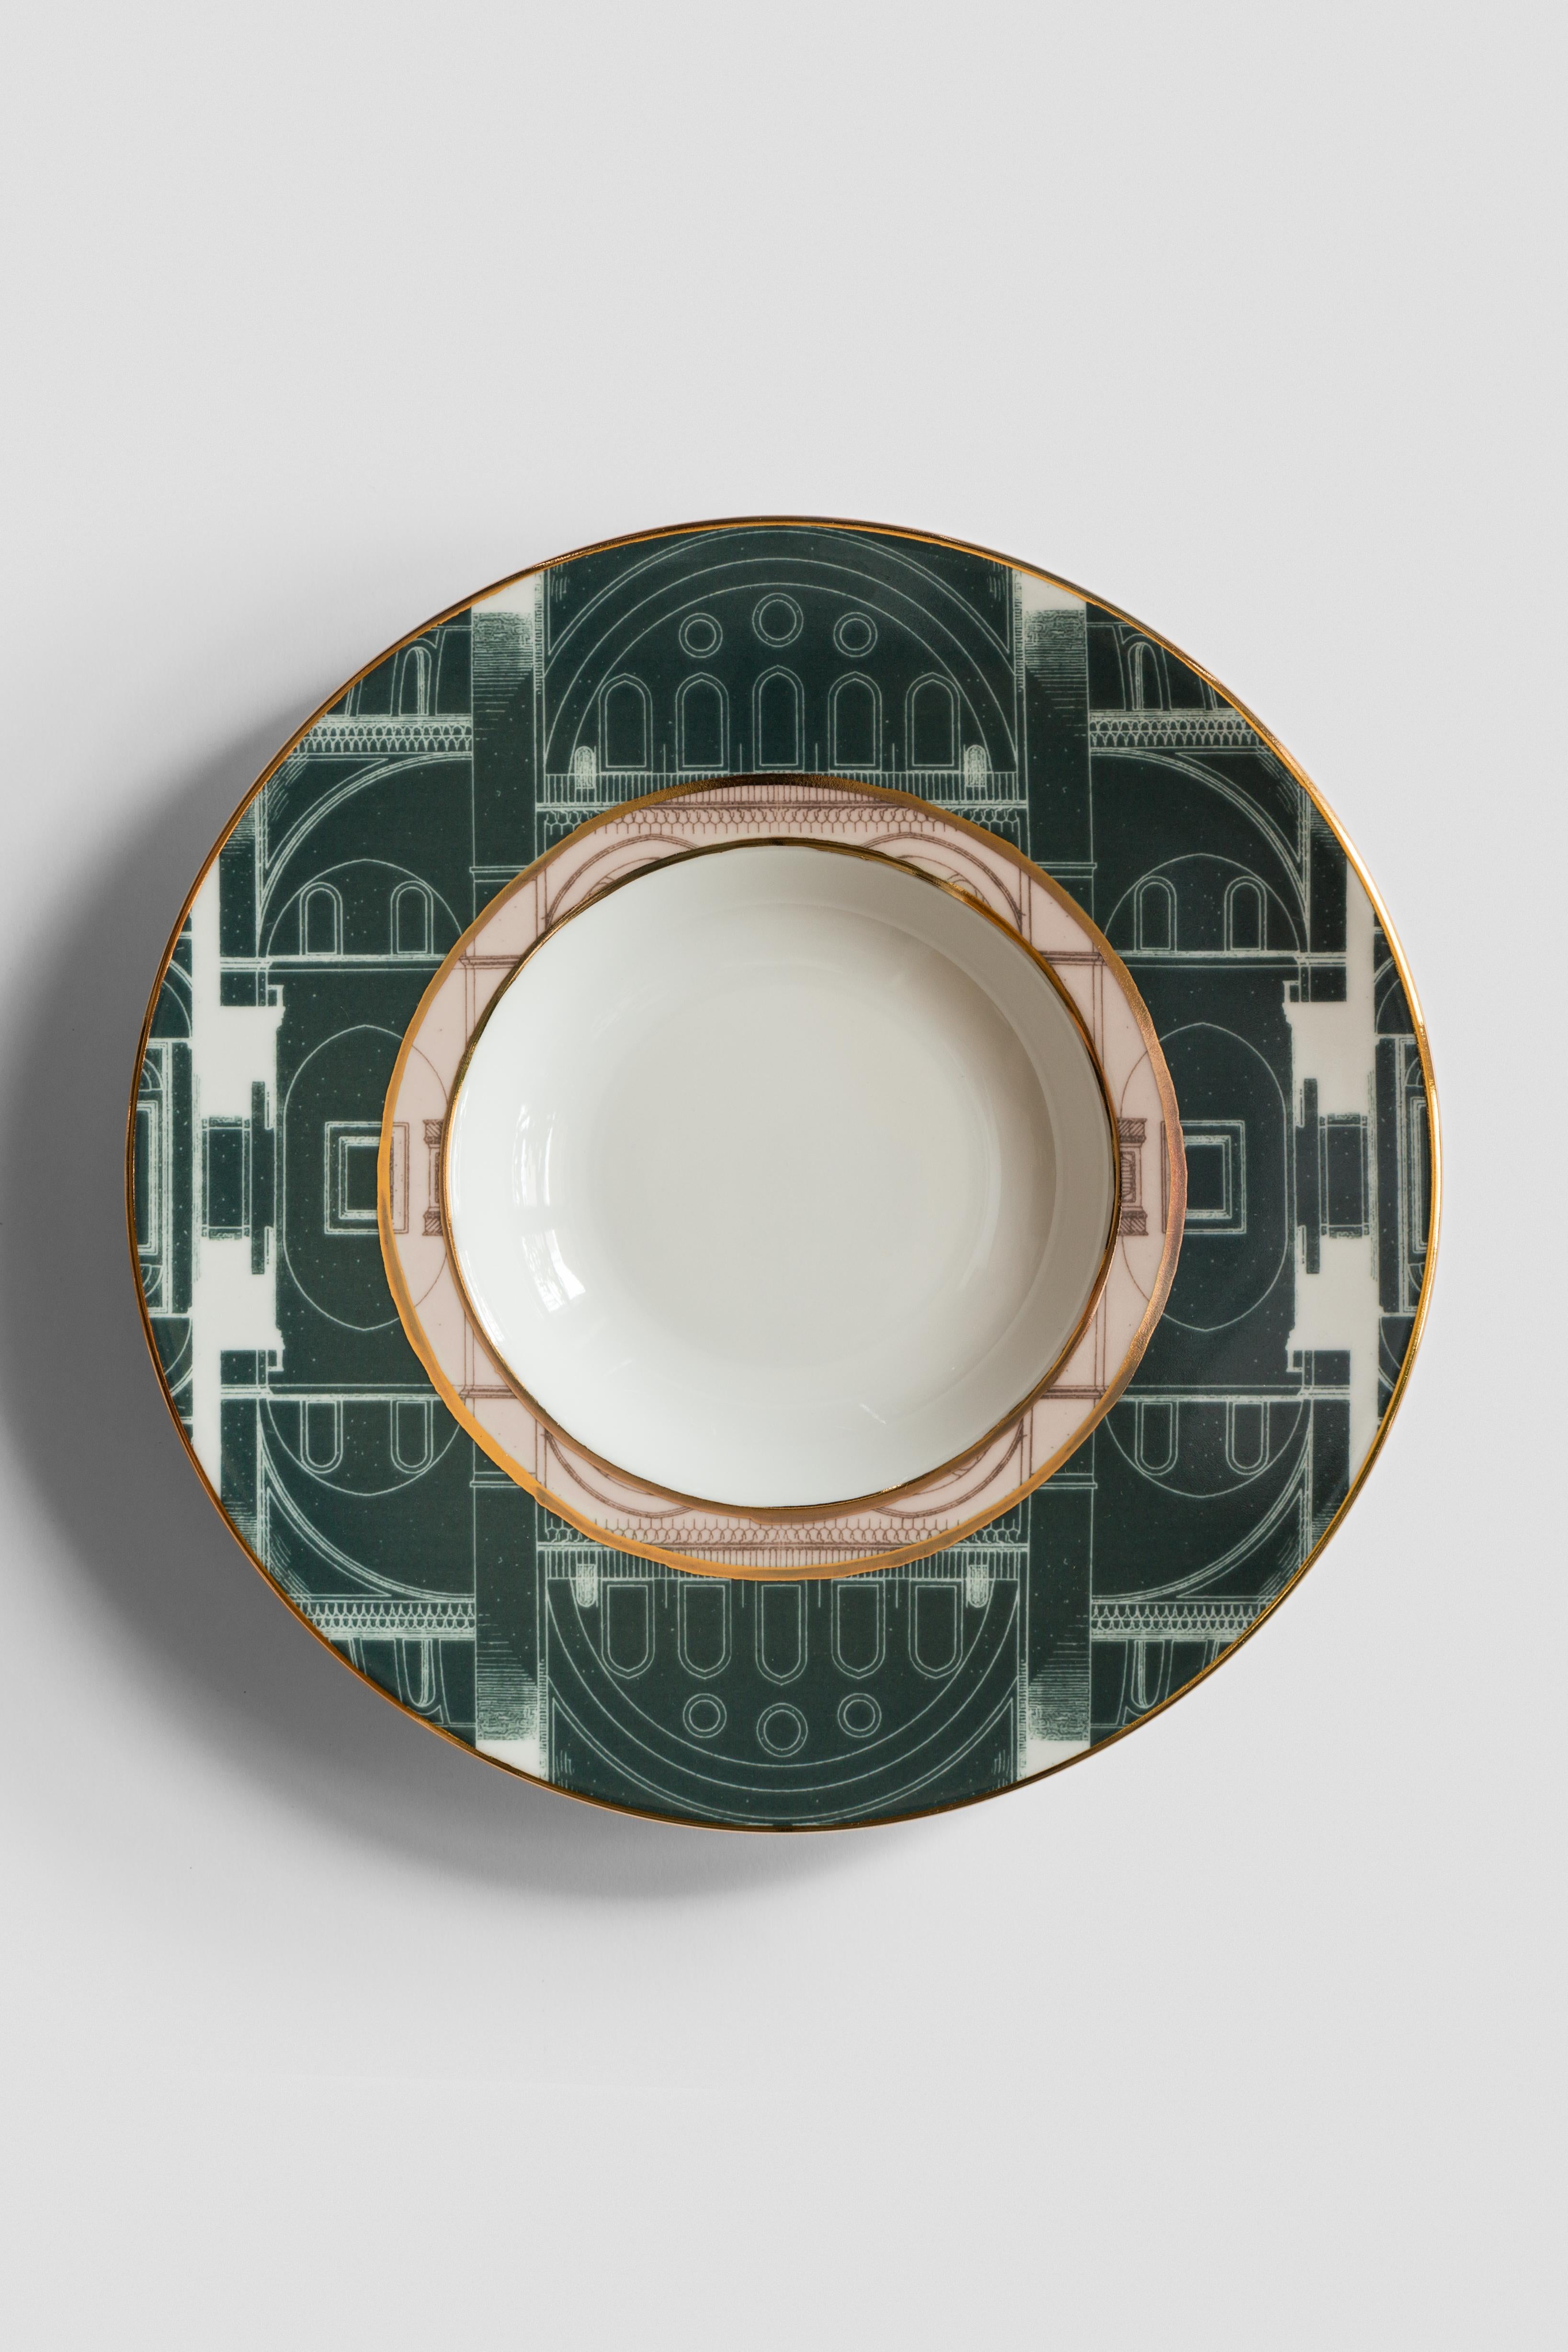 Lebanon, Six Contemporary Porcelain Soup Plates with Decorative Design For Sale 1